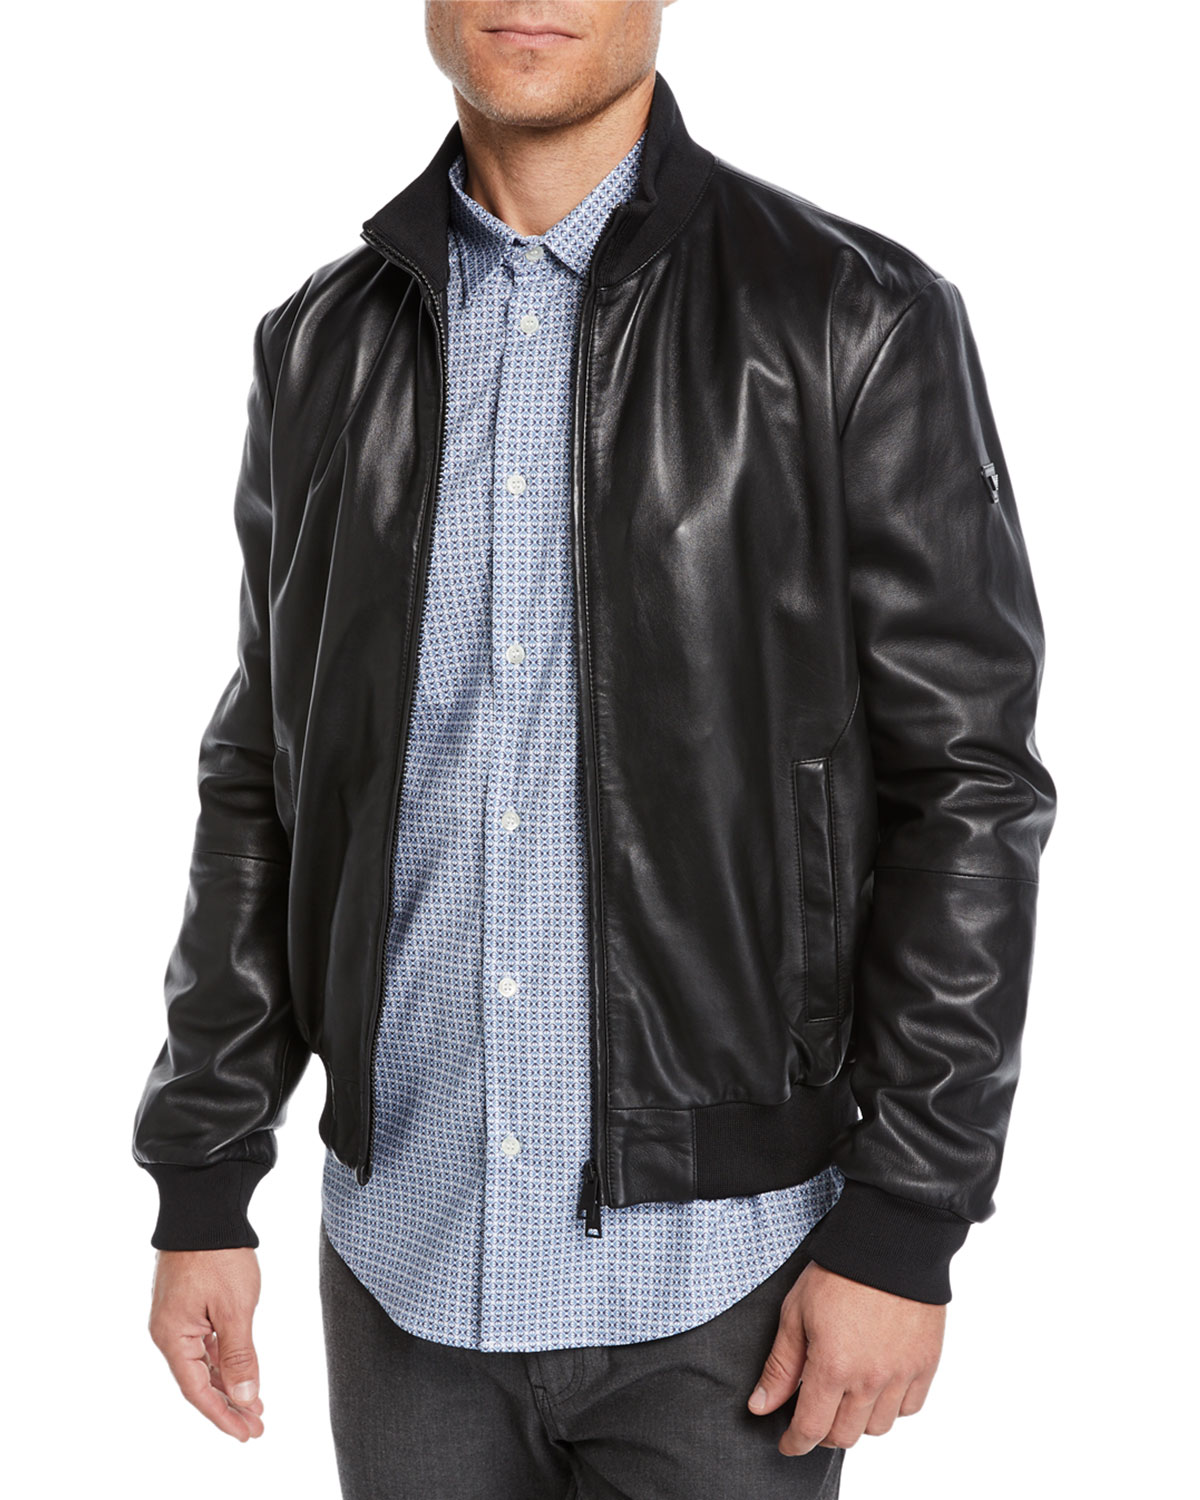 emporio leather jacket price